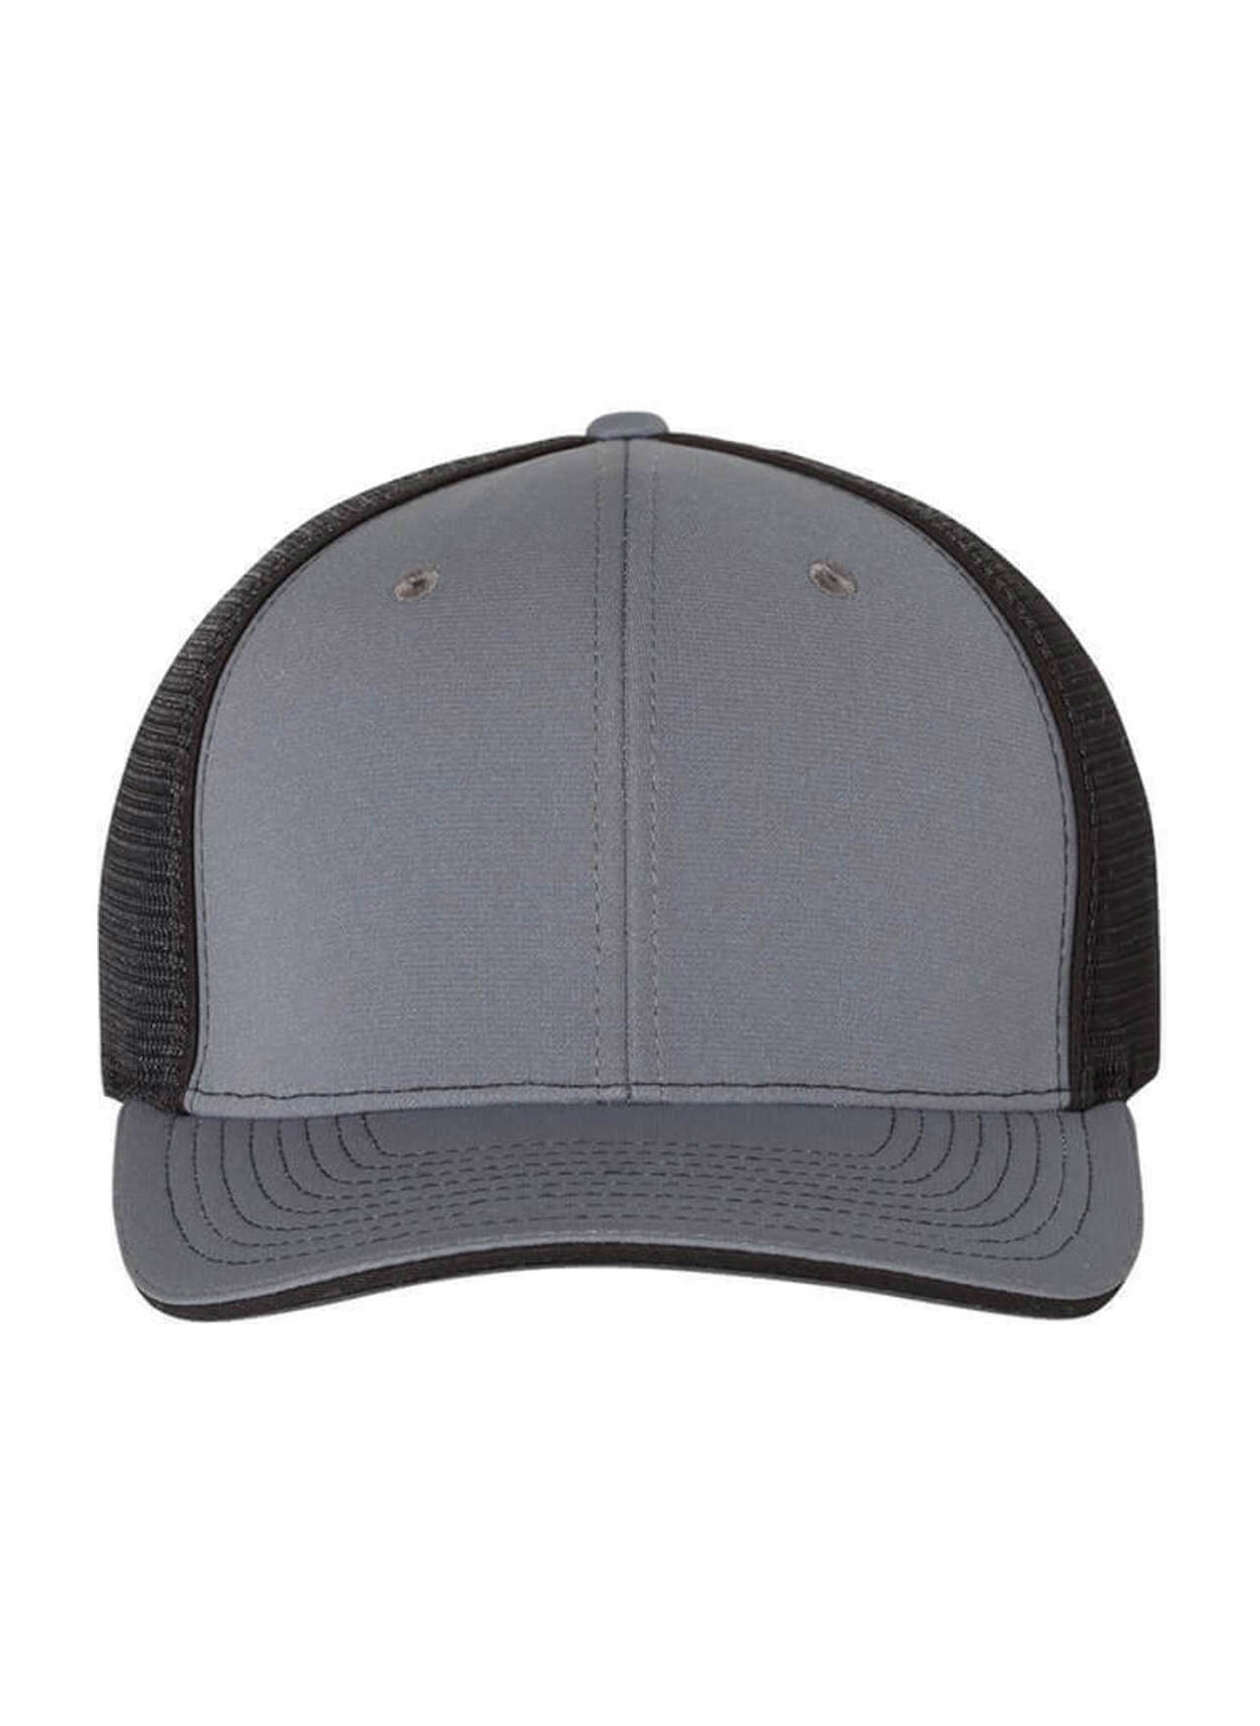 Richardson Charcoal / Black Trucker Hat